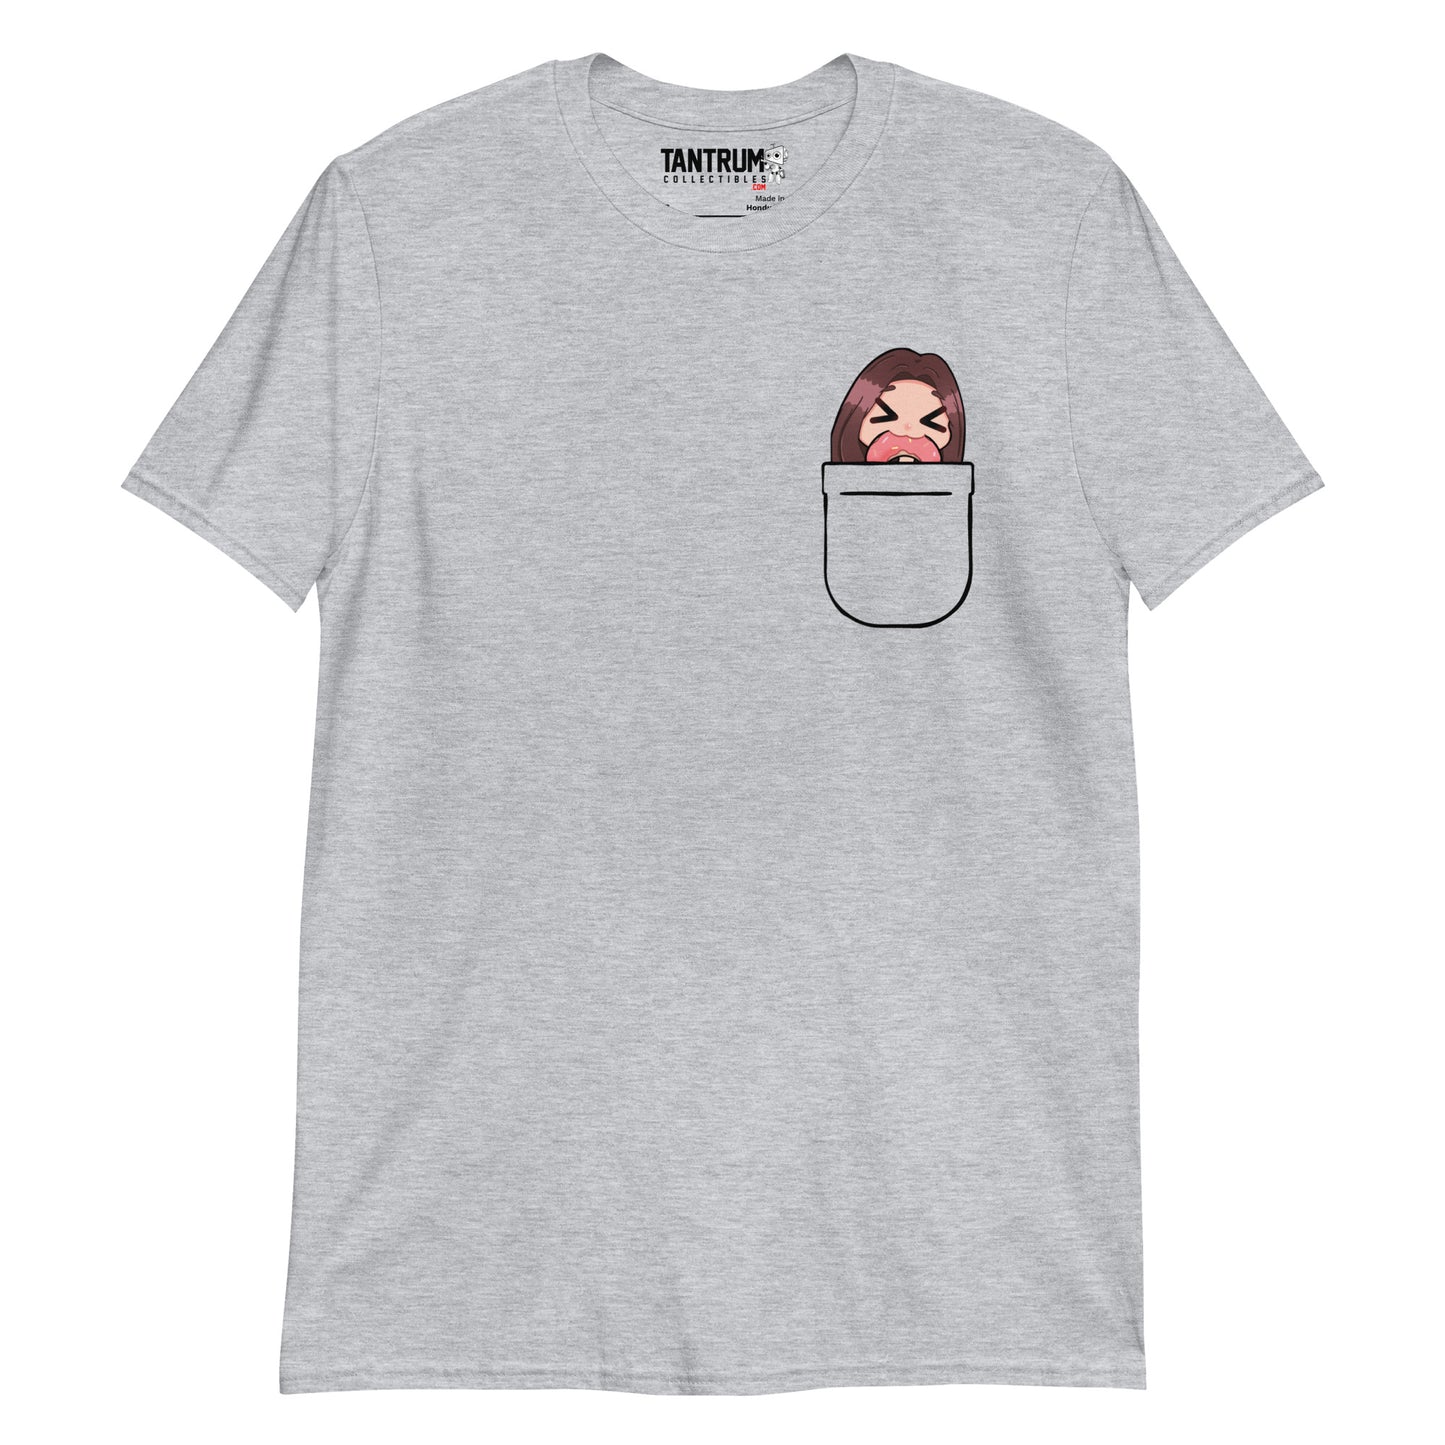 SydSereia - Unisex T-Shirt - Printed Pocket Nom